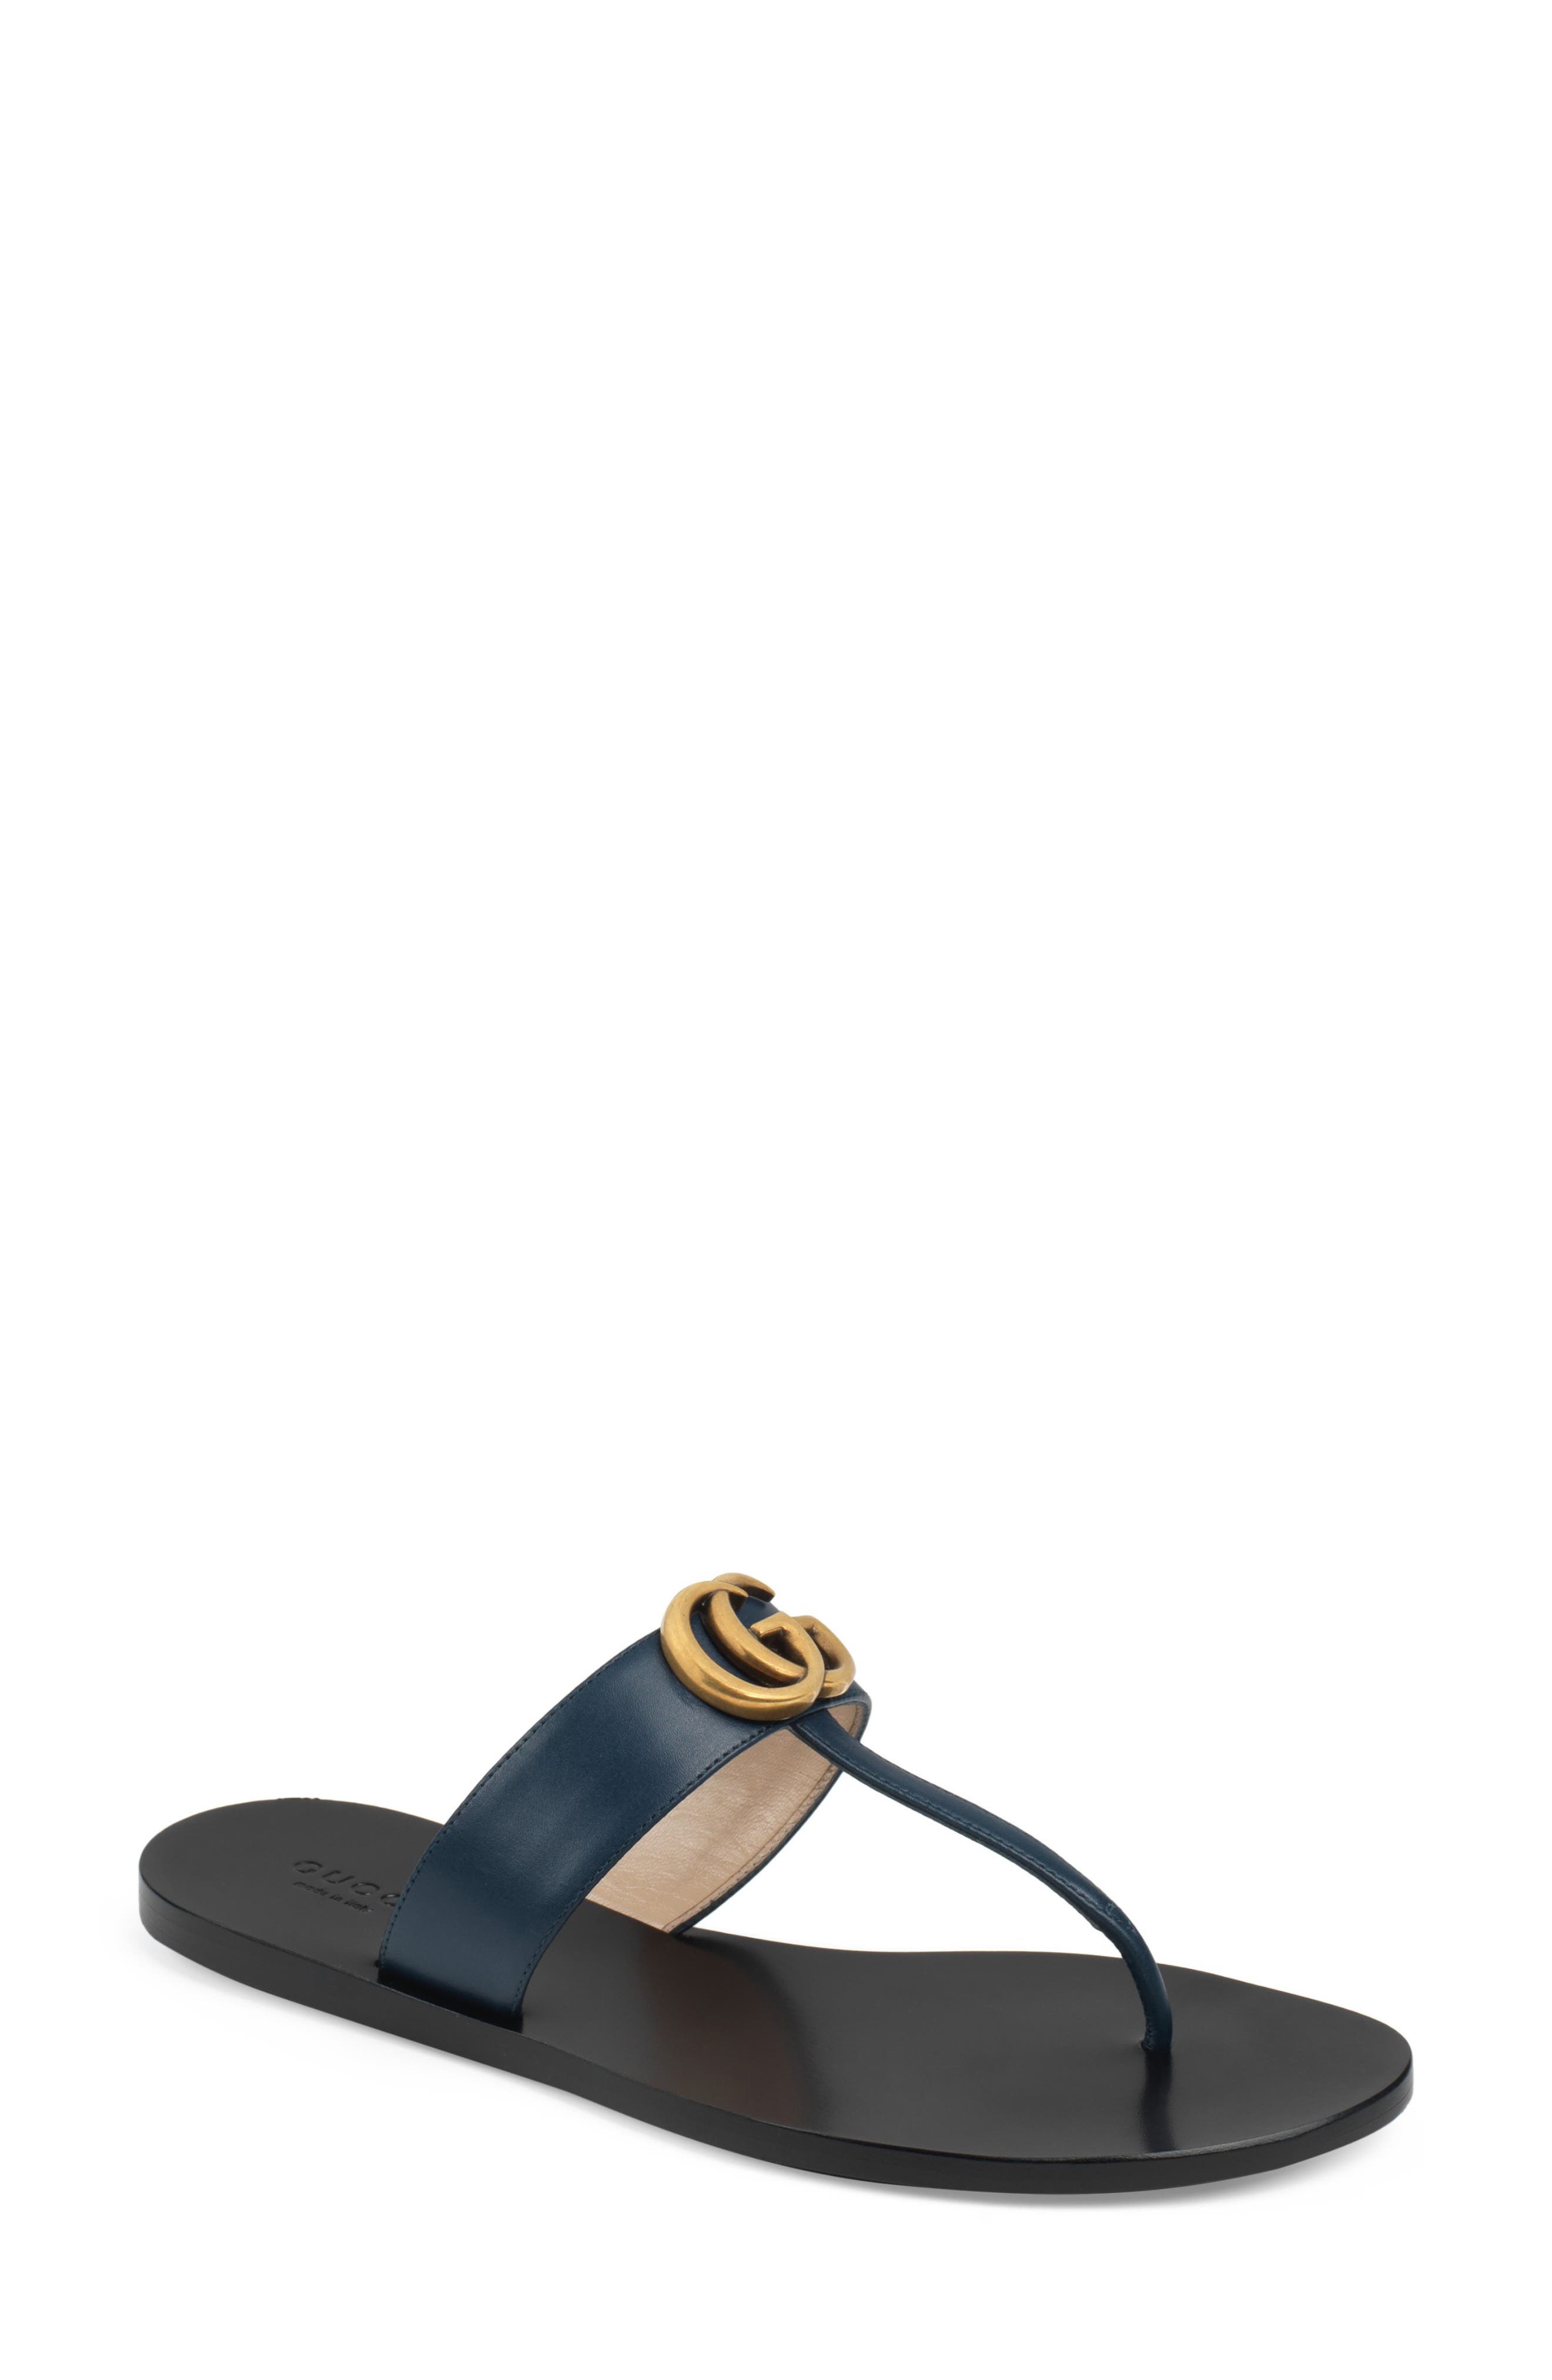 gucci men's thong sandals